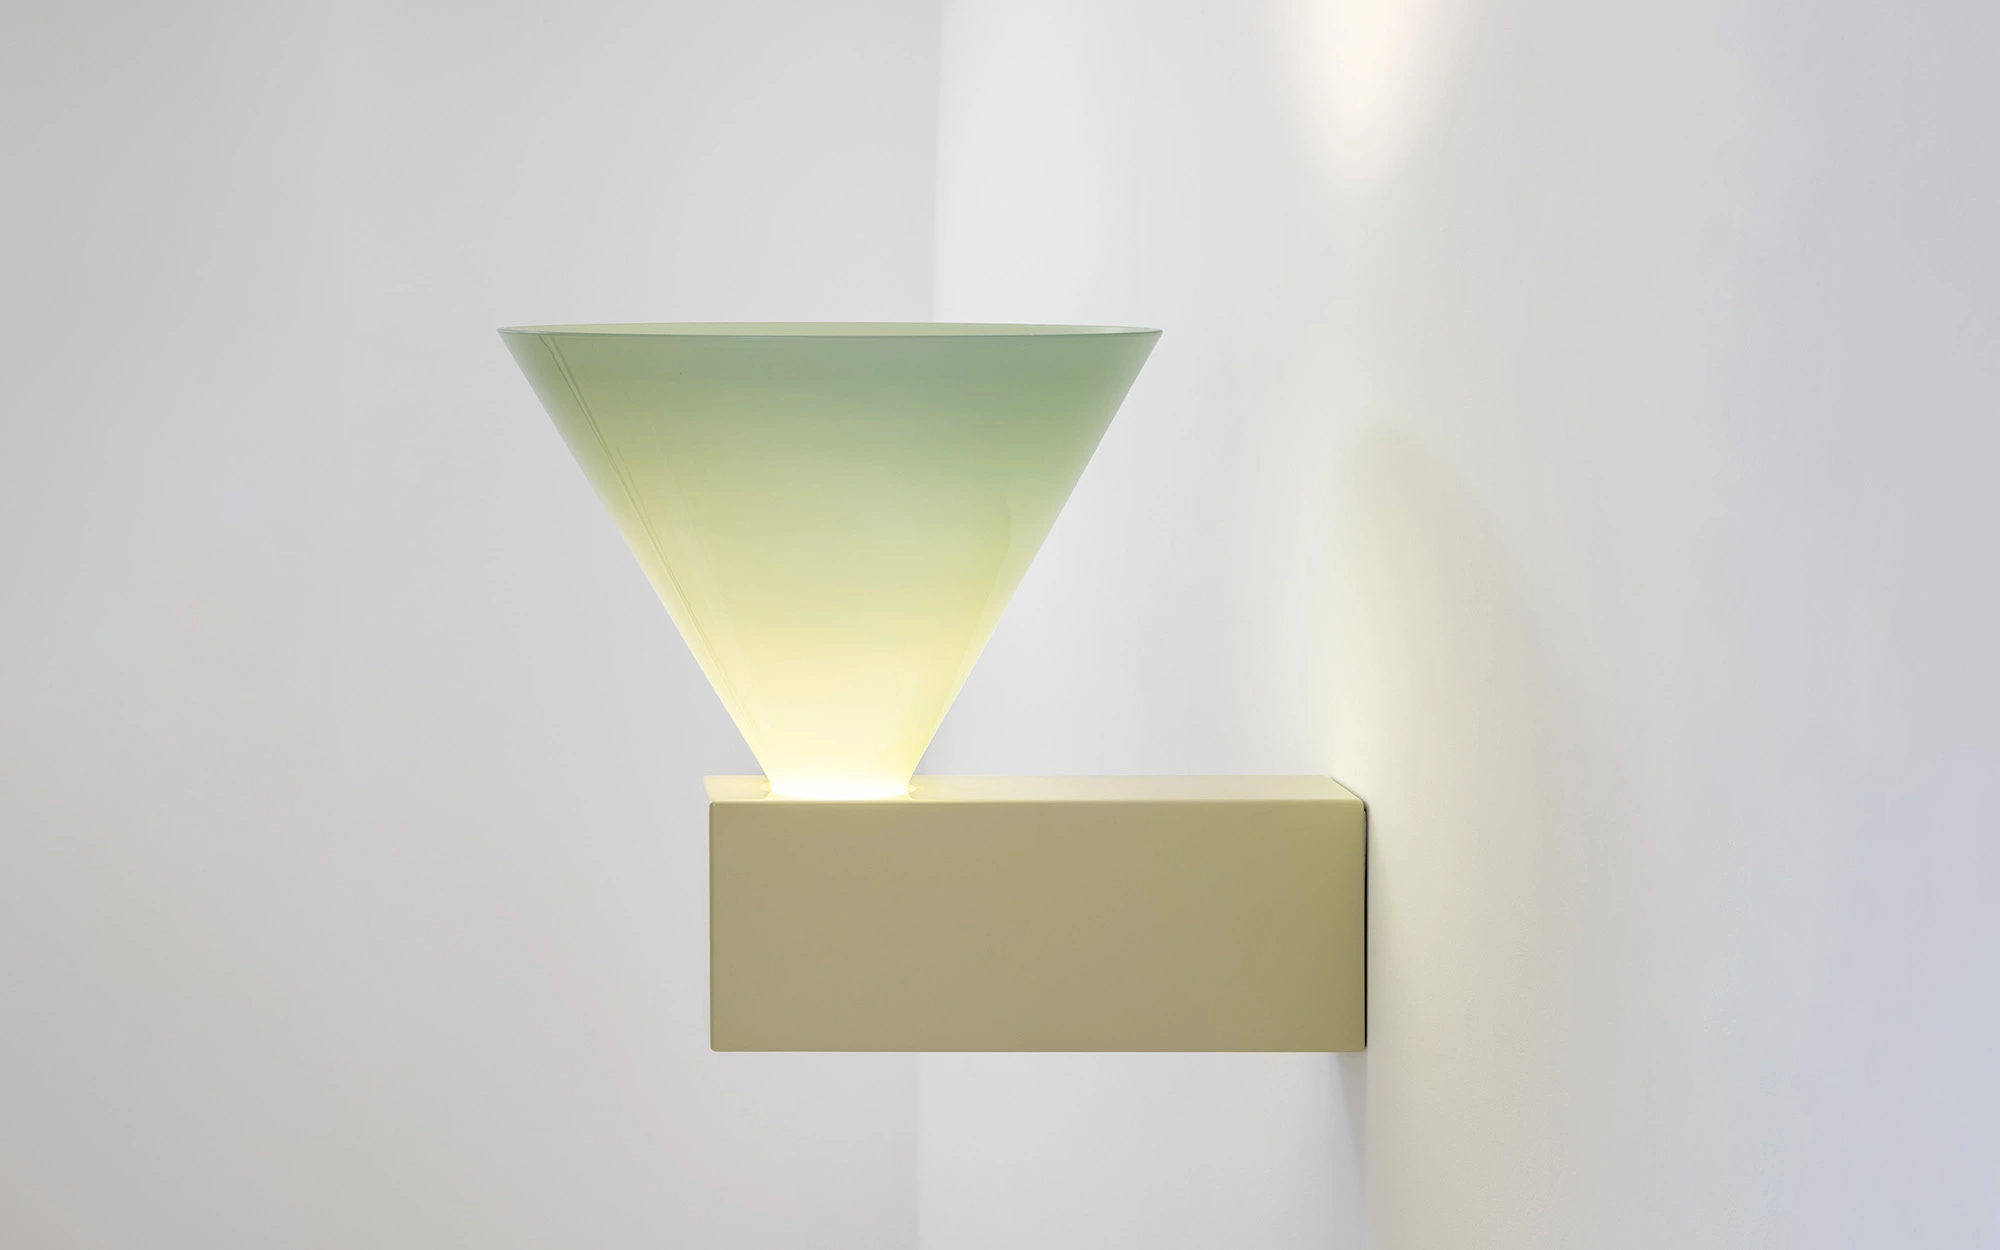 Signal W MONOCHROMATIC - Edward Barber and Jay Osgerby - Floor light - Galerie kreo